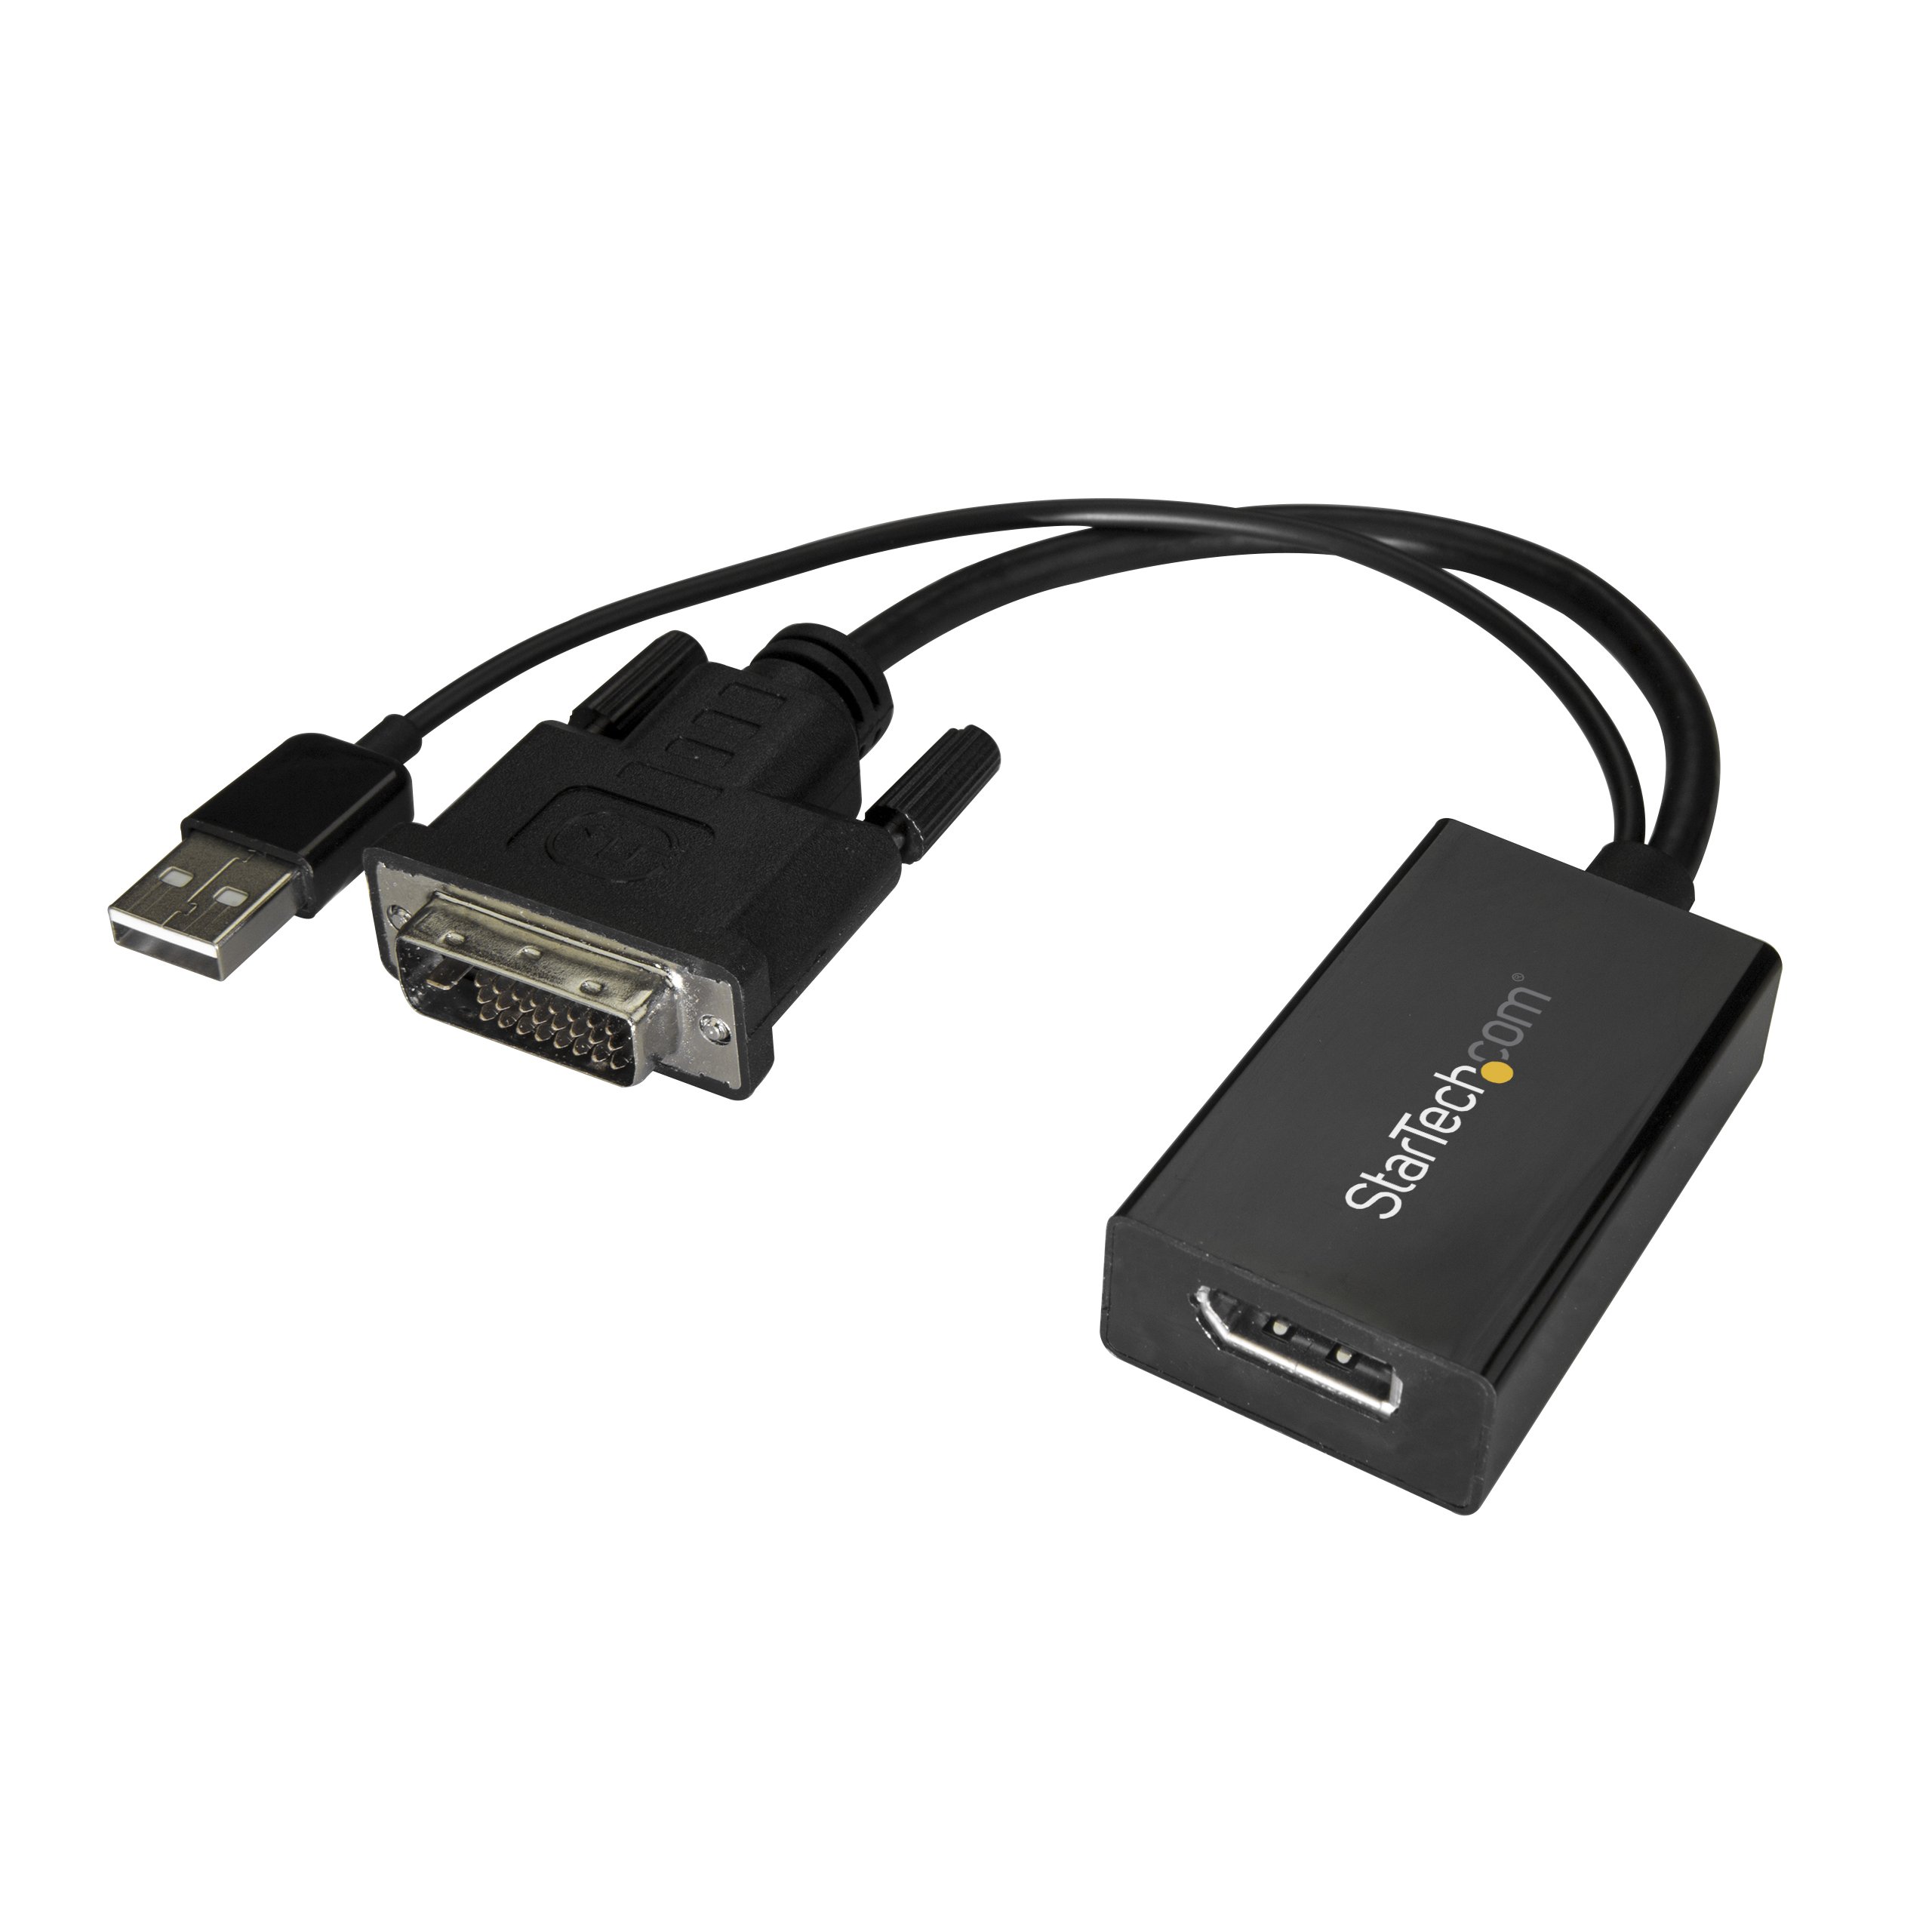 StarTech.com DVI to DisplayPort Adapter - with USB Power - 1920 x 1200 - DVI to DisplayPort Converter - Video Adapter - DVI-D to DP